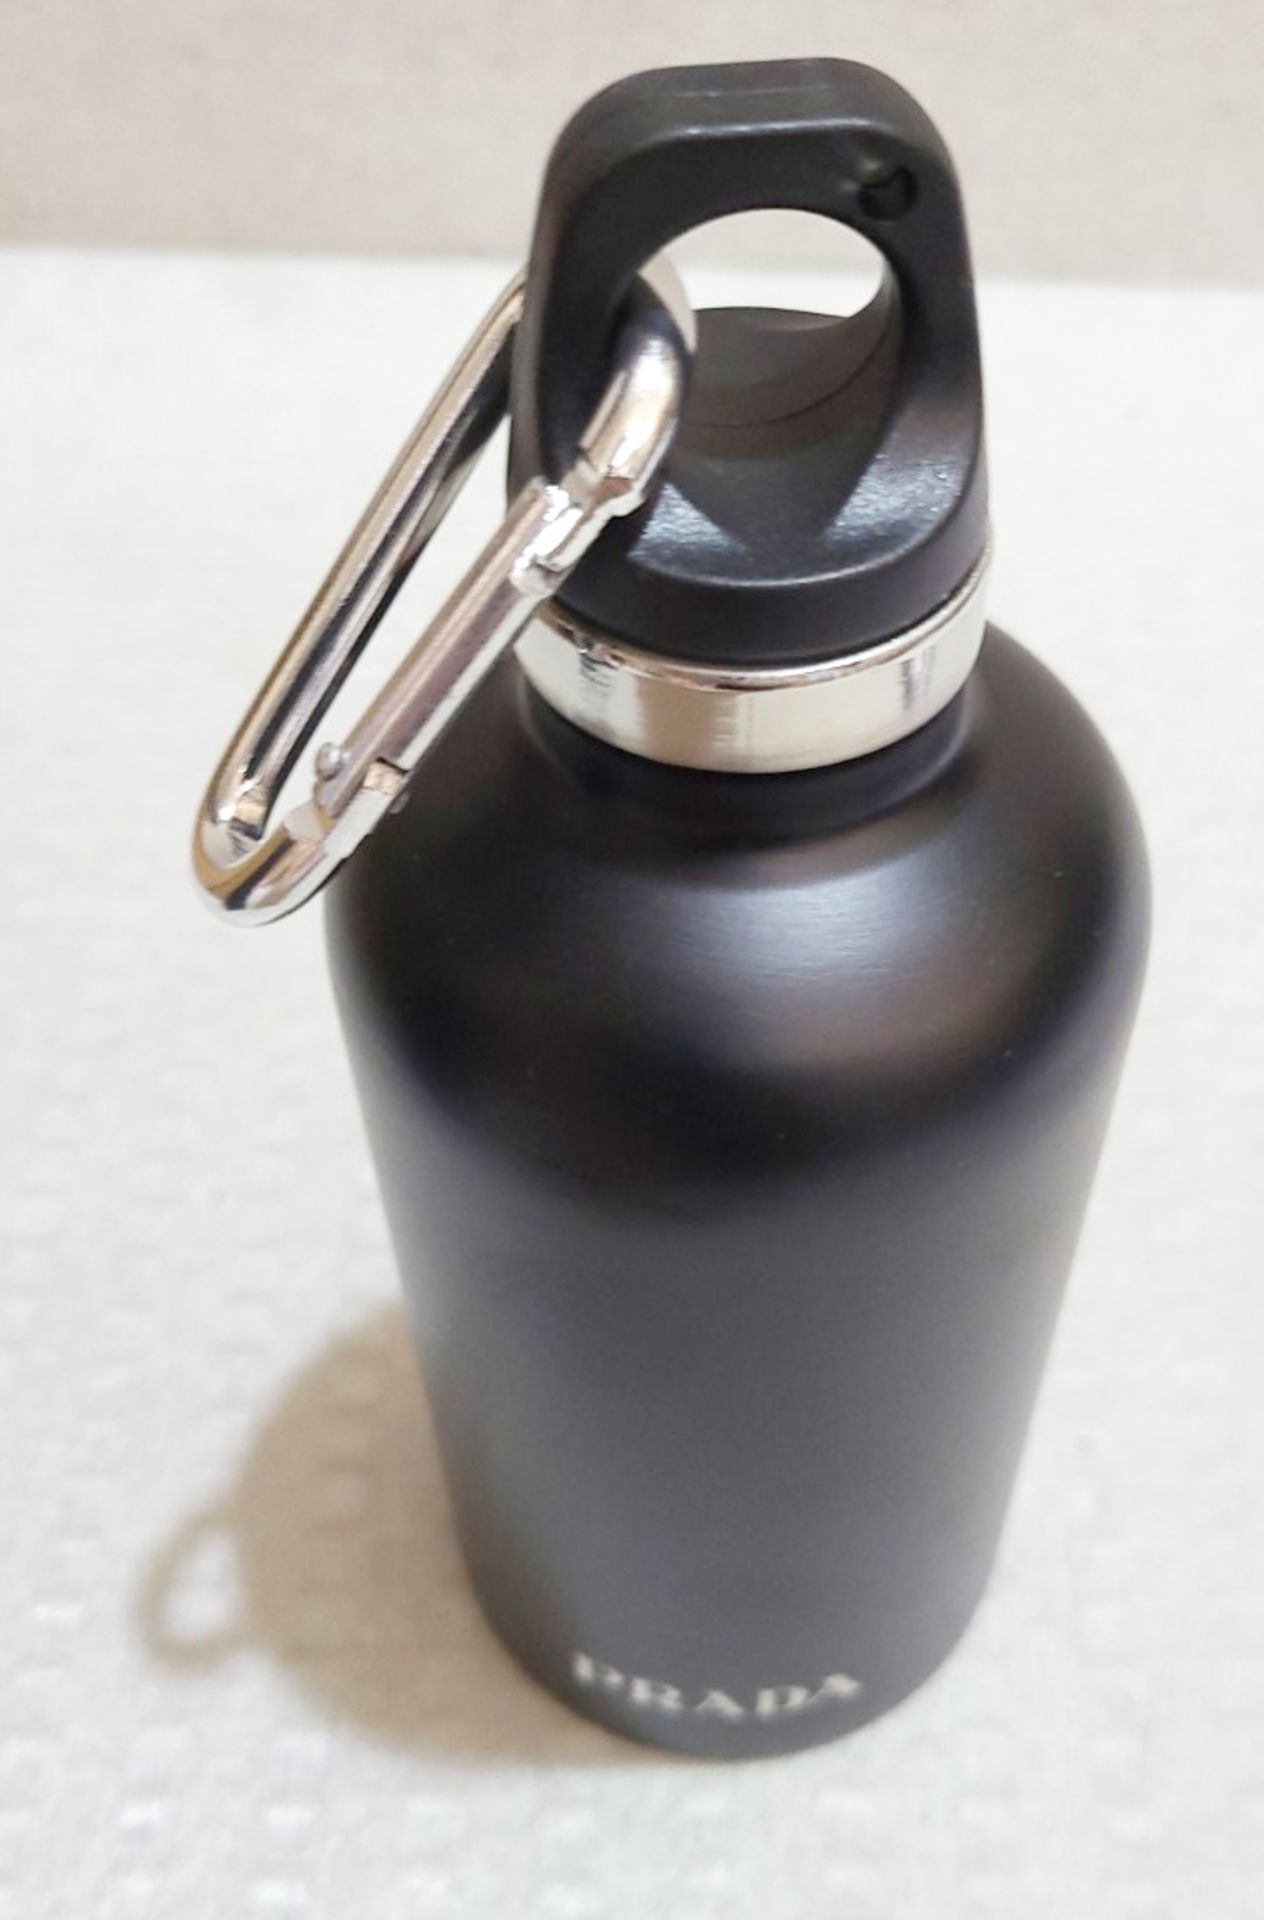 1 x PRADA Stainless Steel Insulated Water Bottle (350ml) - Original Price £85.00 - Image 5 of 5